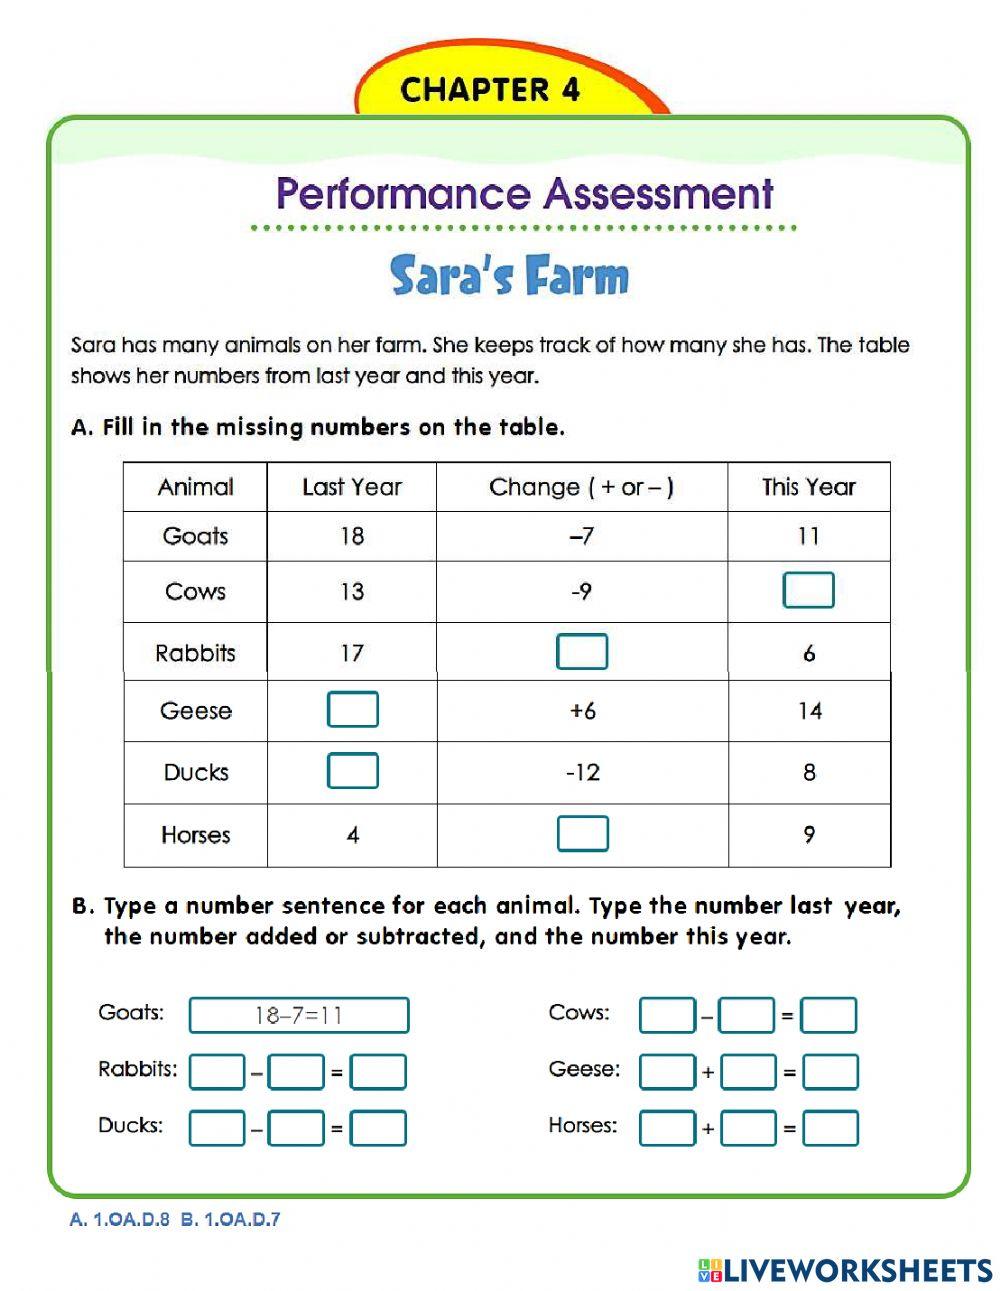 Chapter 4 Performance Assessment